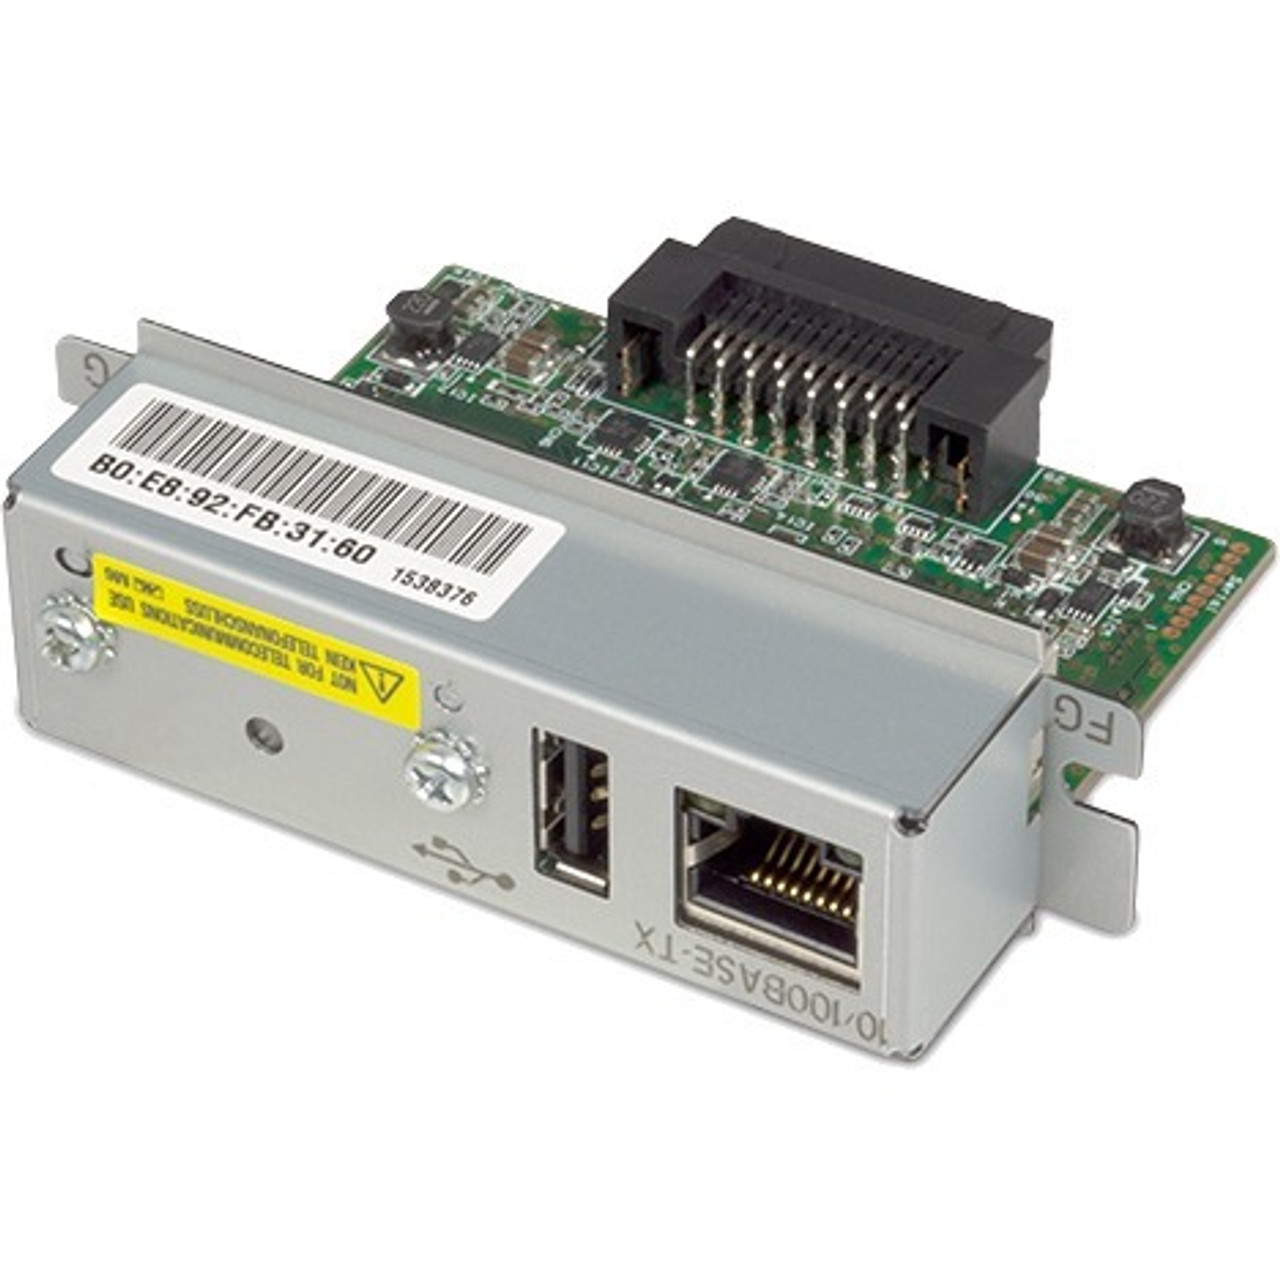 C32C881008 Epson Ub-e04 Connect-It Ethernet Interface Card